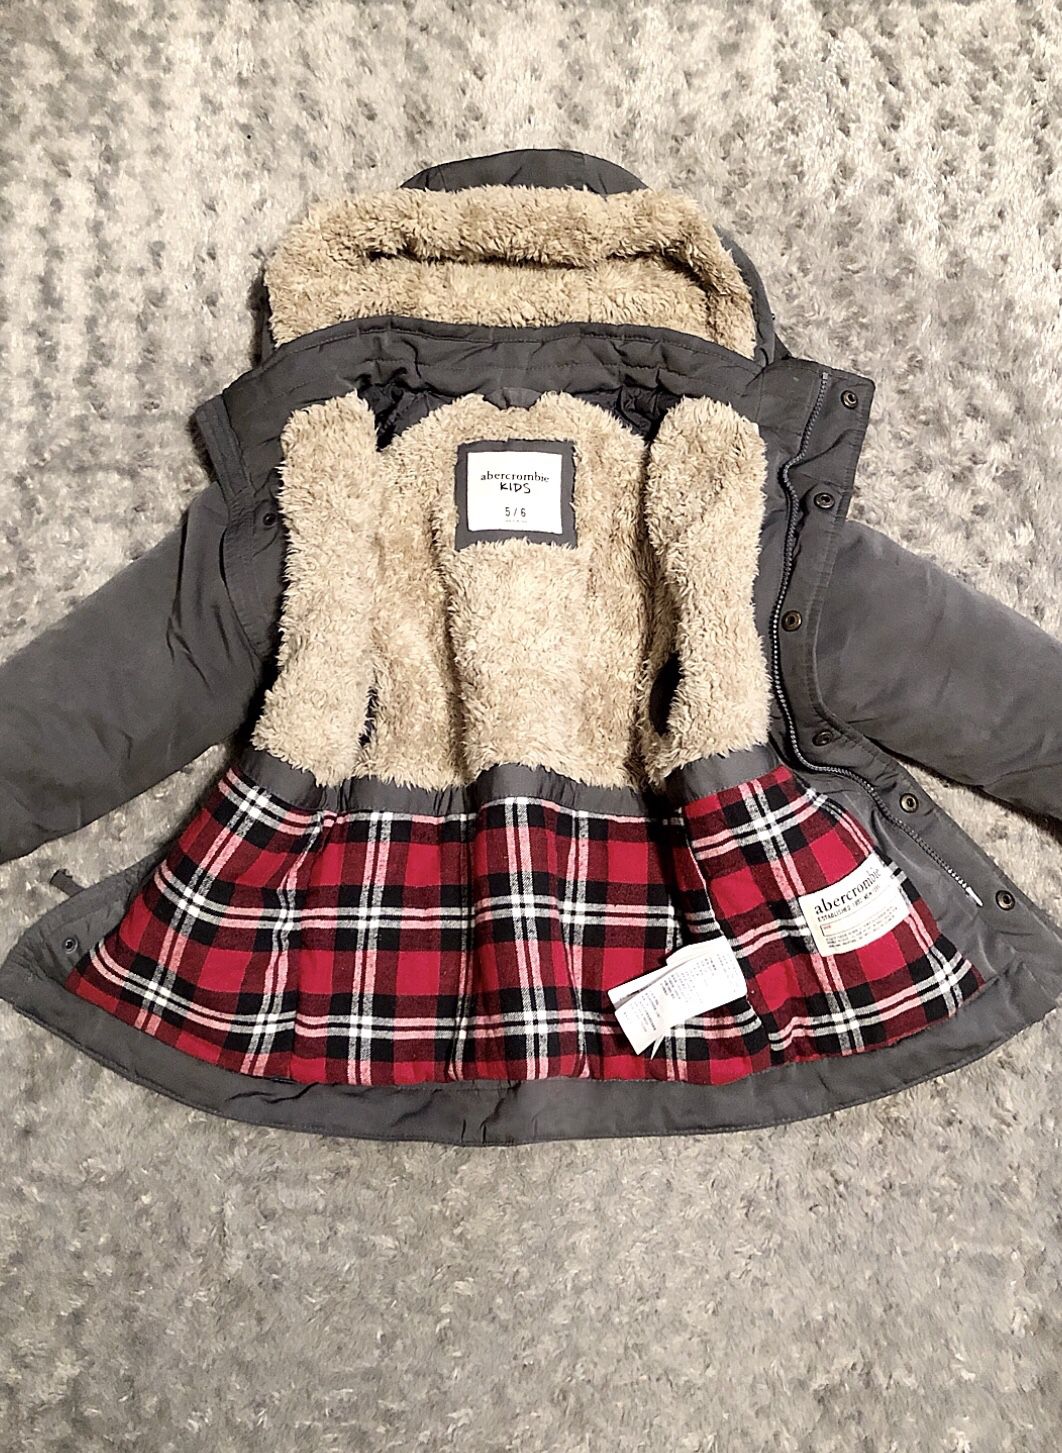 Boys Abercrombie kids coat paid $120 5/6 Like new! Very nice coat for the Fall/Winter season. liningSherpa inside grey coat w tan sherpa lining & che